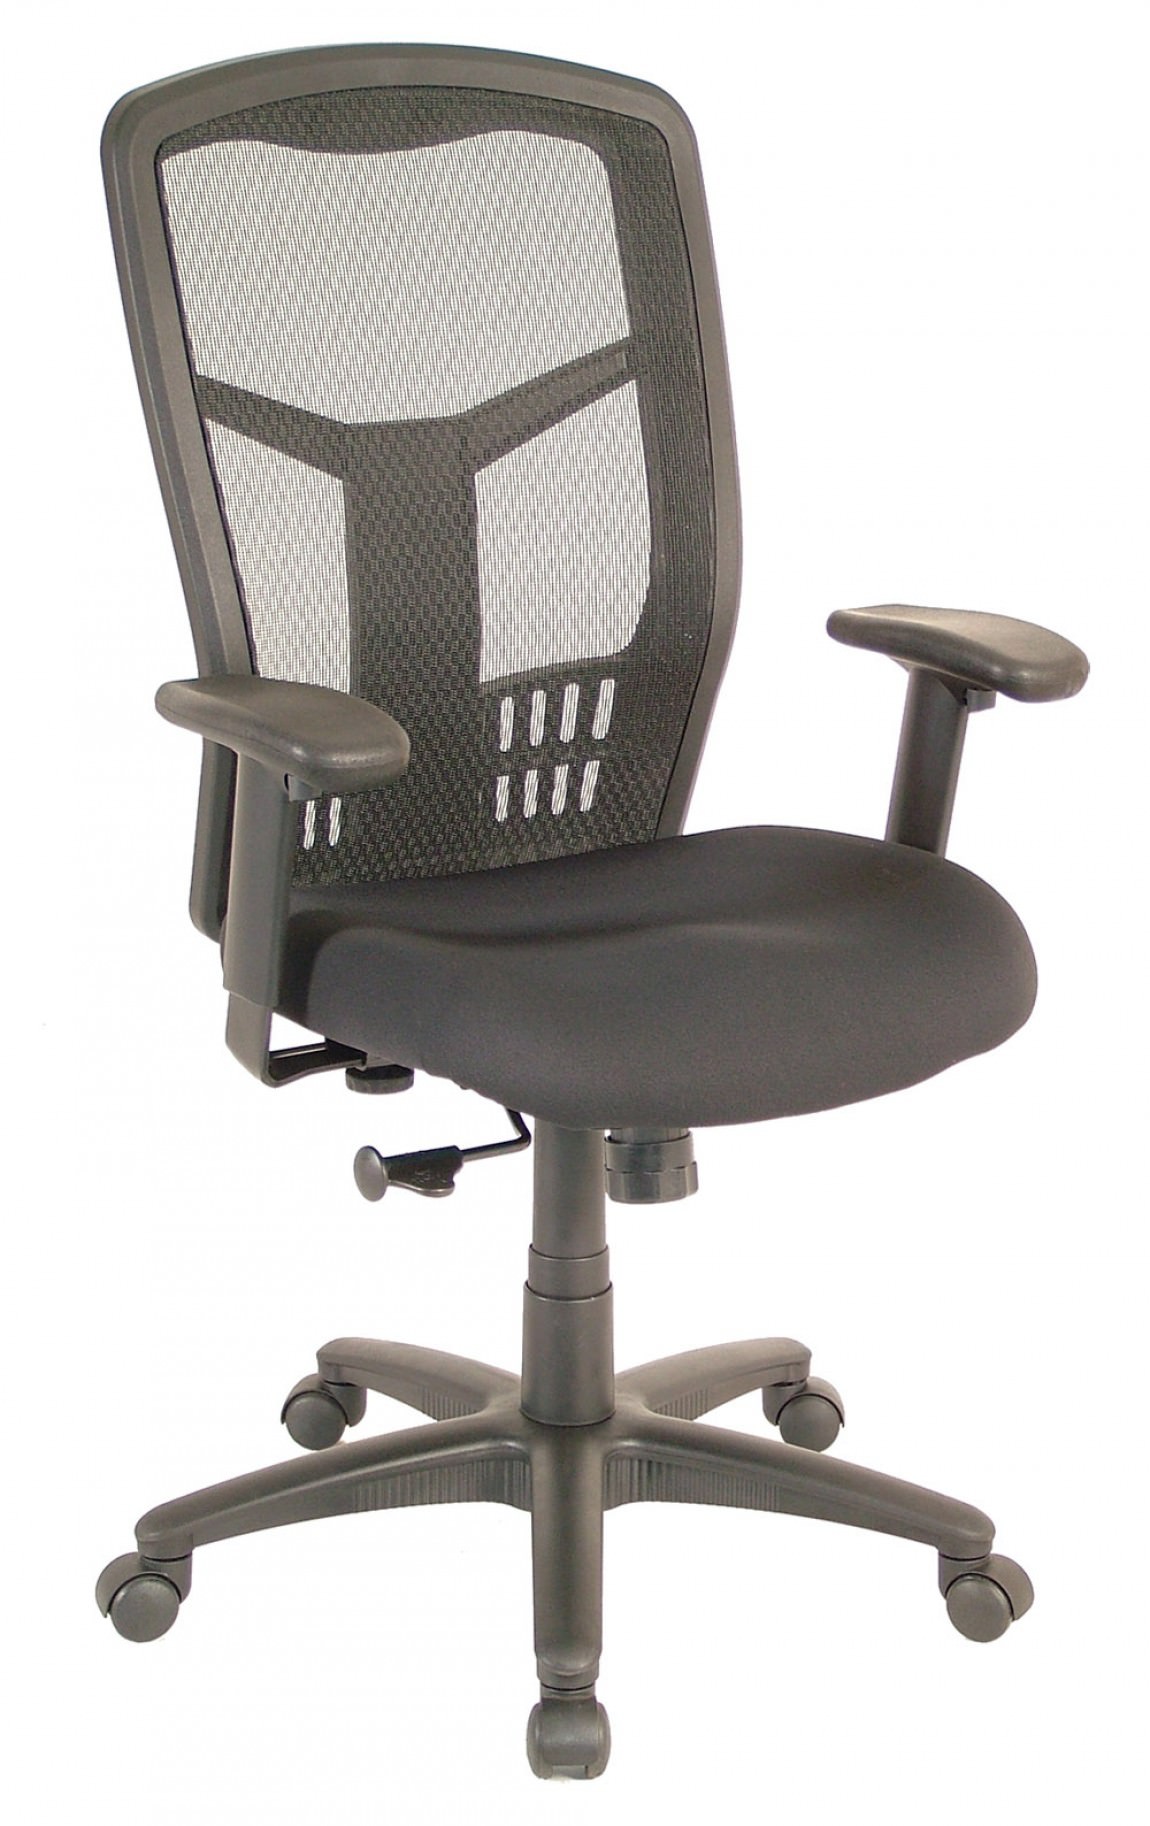 gabrylly ergonomic mesh office chair high back desk chair